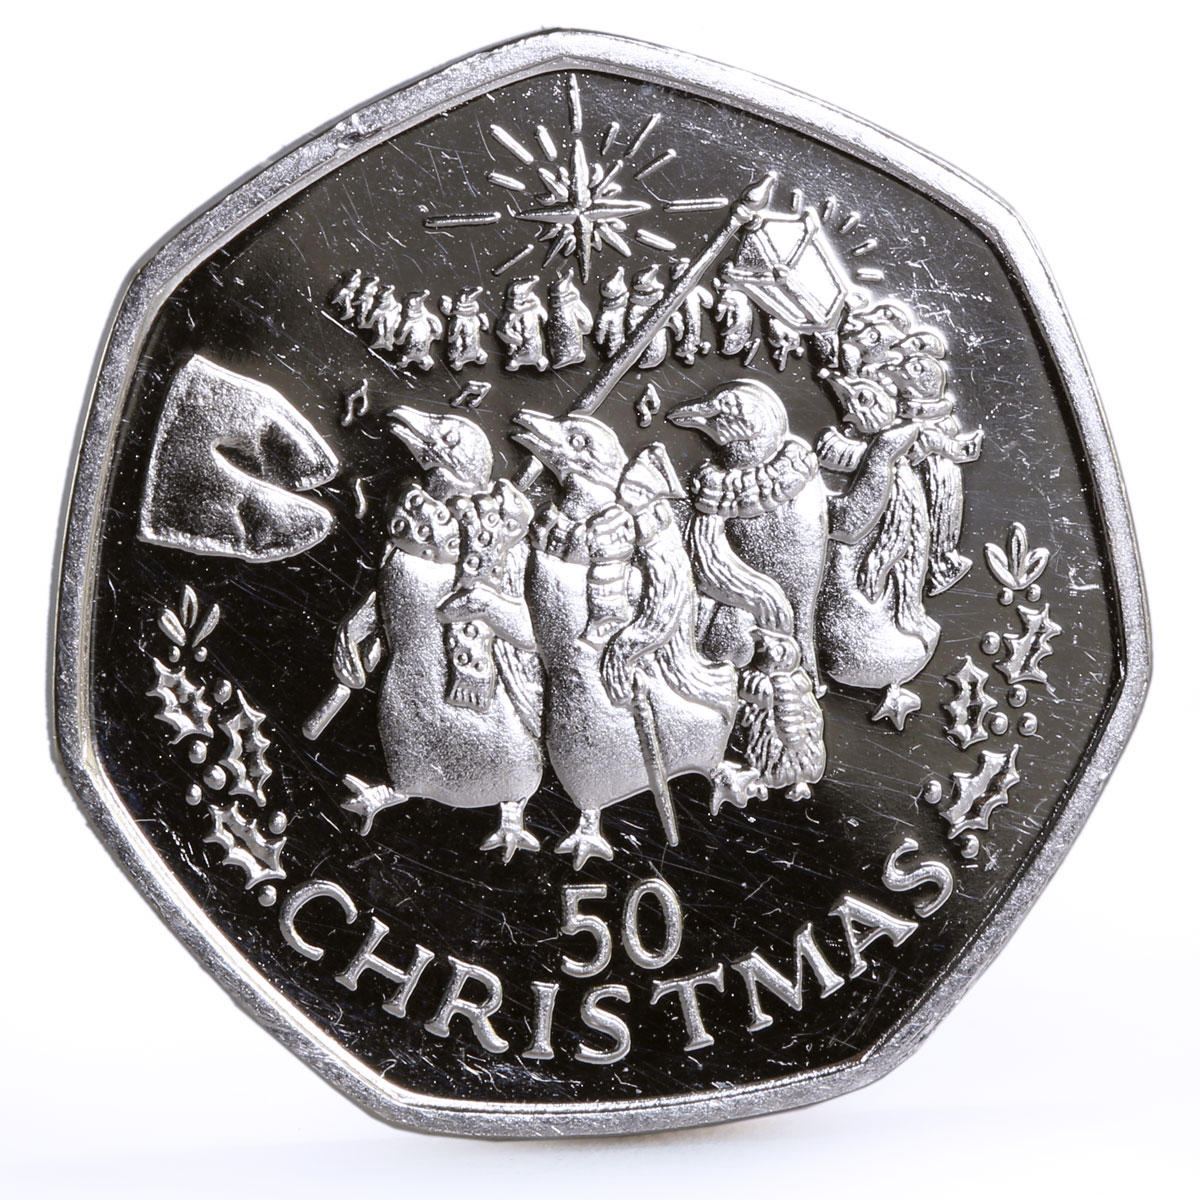 Gibraltar 50 pence Holidays Saints Christmas Penguin Parade CuNi coin 1995